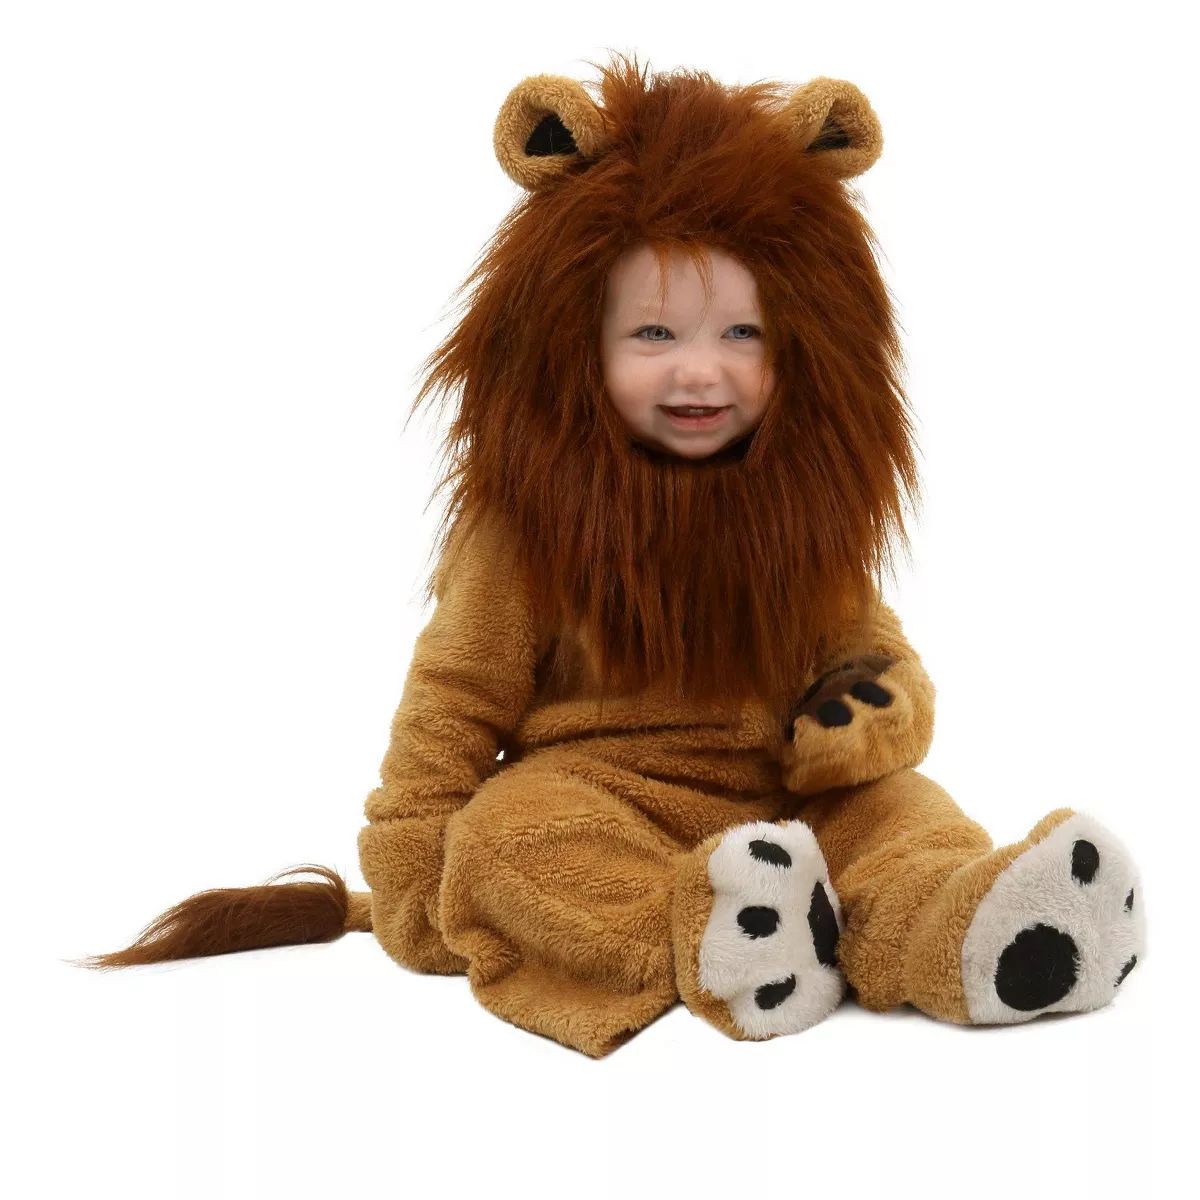 HalloweenCostumes.com Infant Deluxe Lion Costume | Target